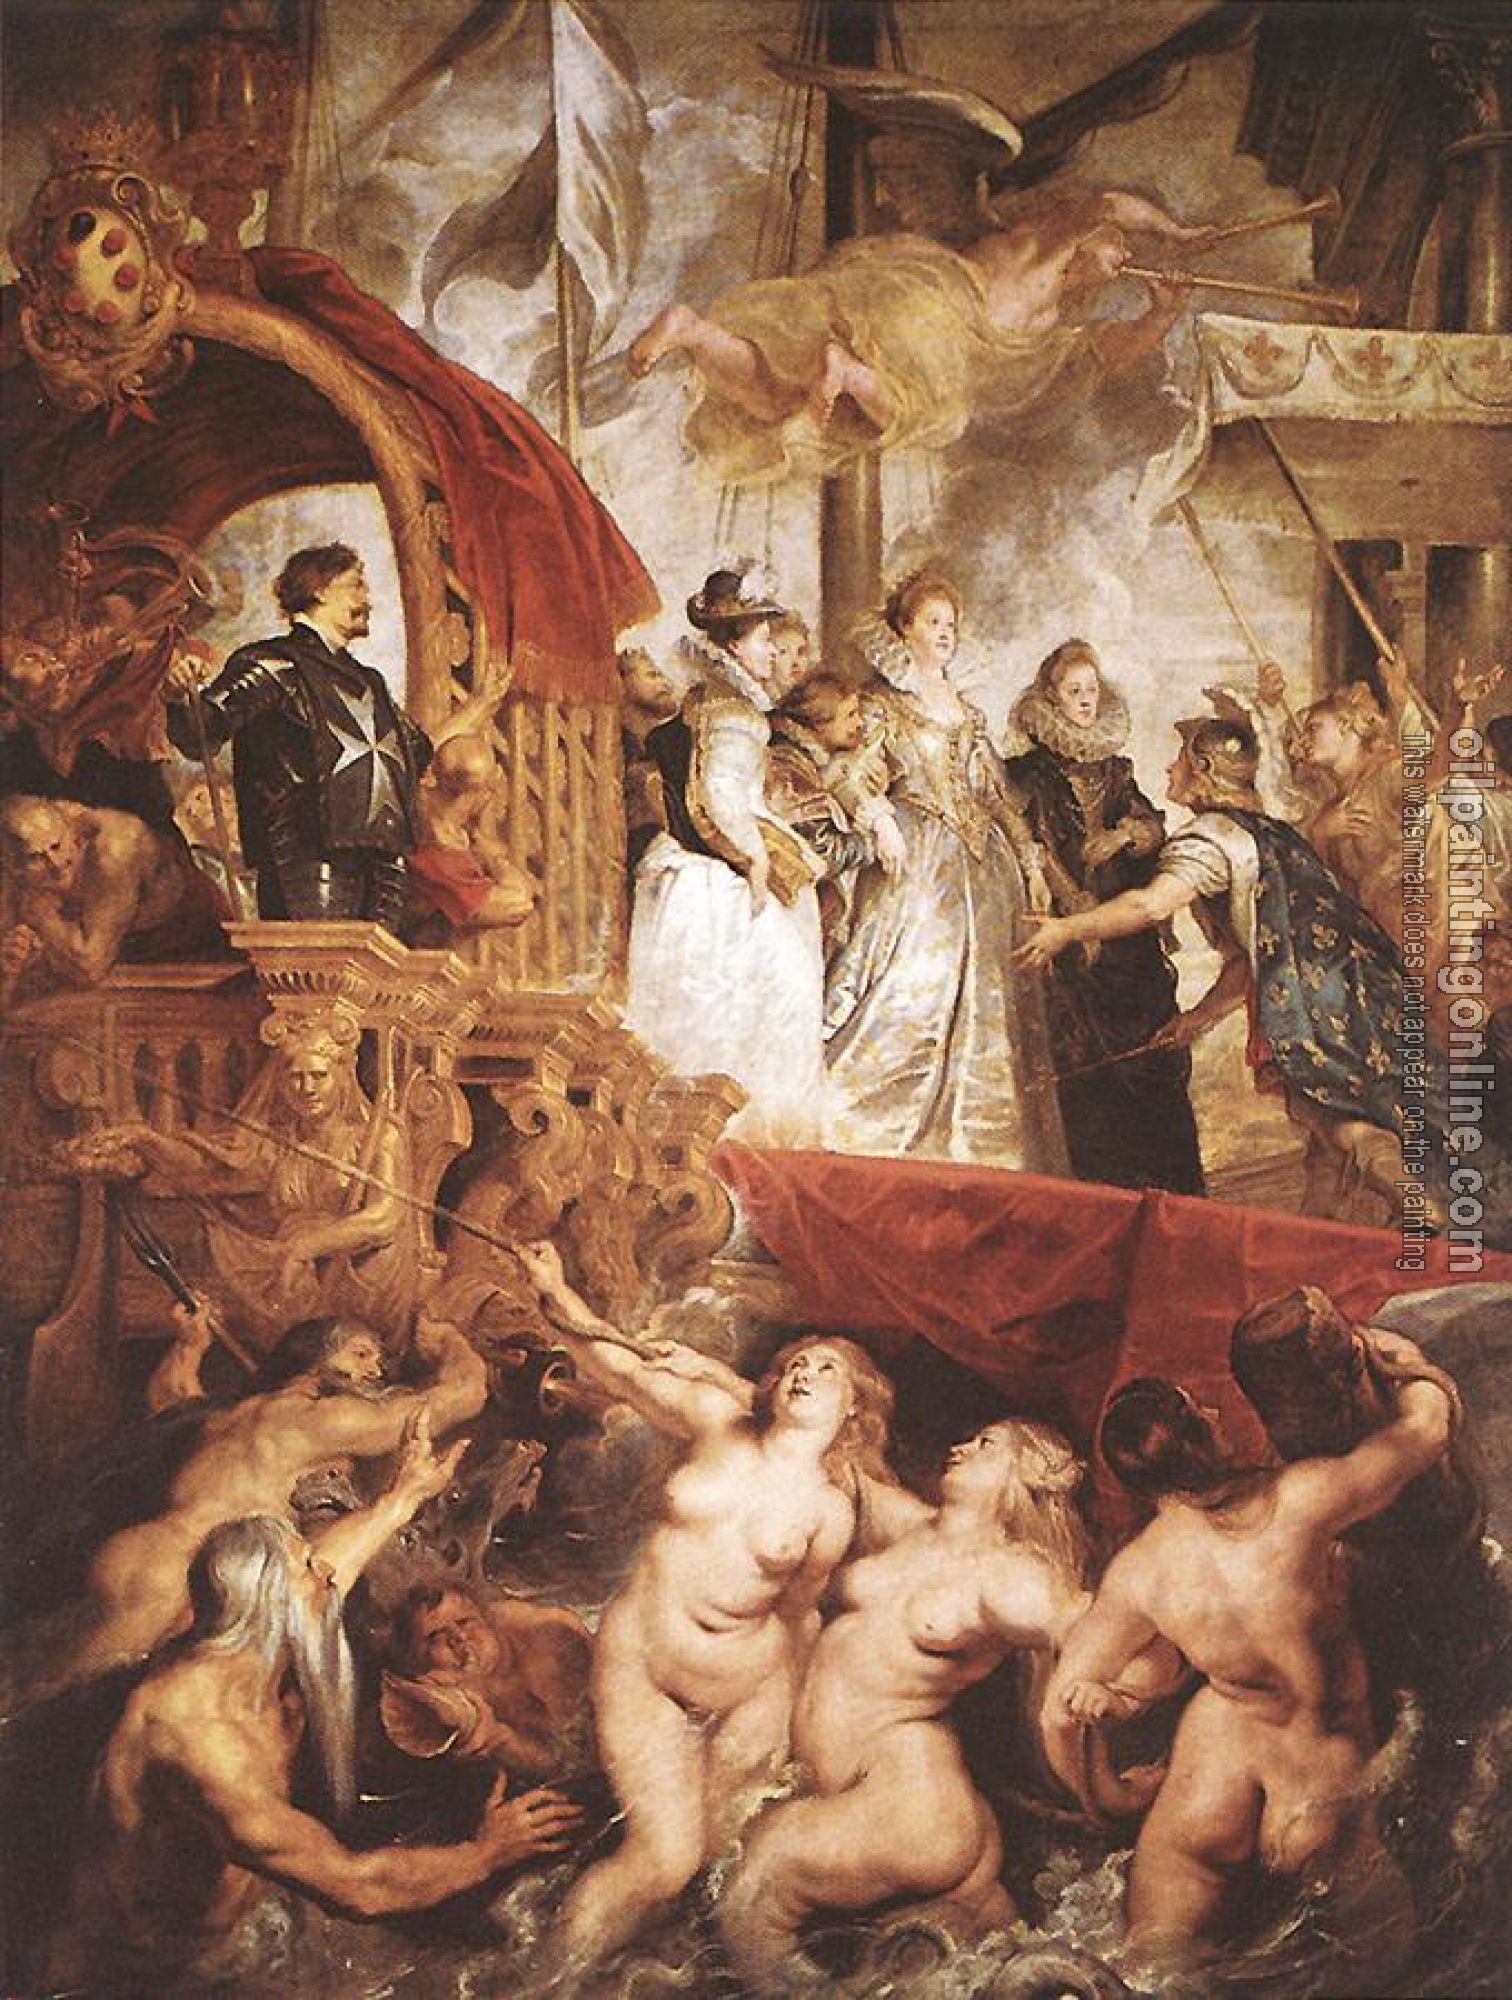 Rubens, Peter Paul - The Landing of Marie de' Medici at Marseilles